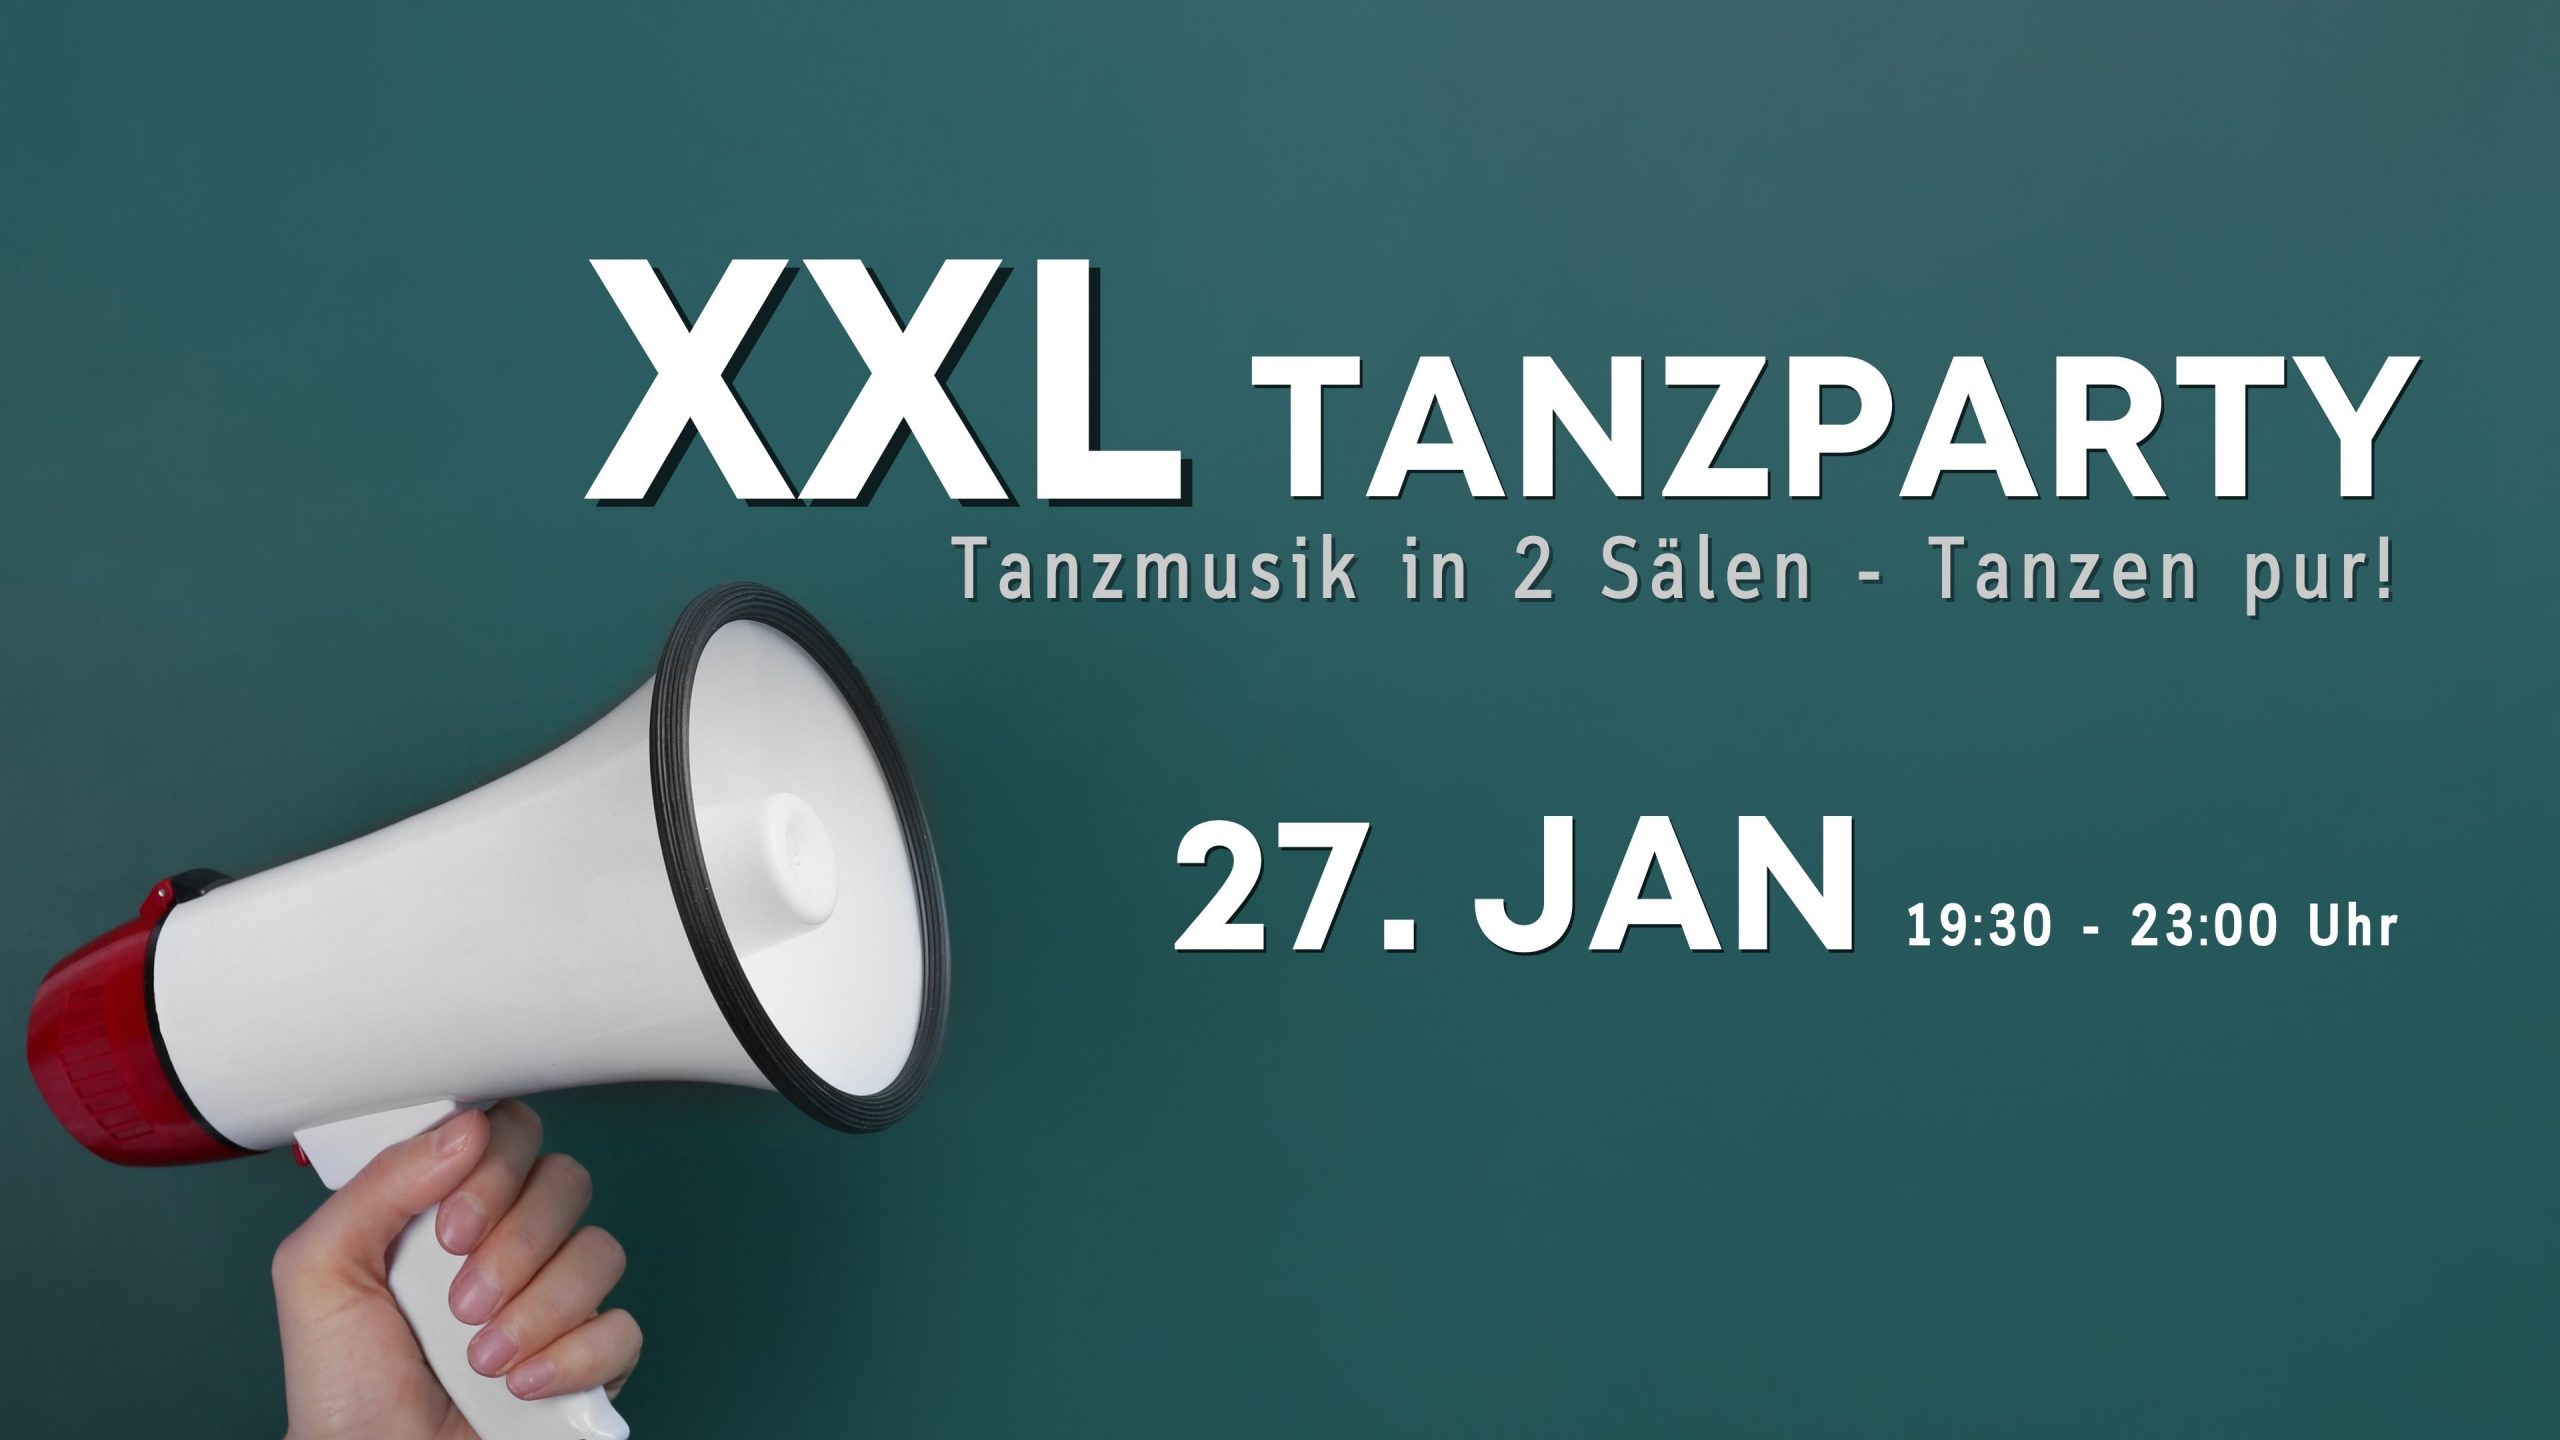 Tanzparty XXL